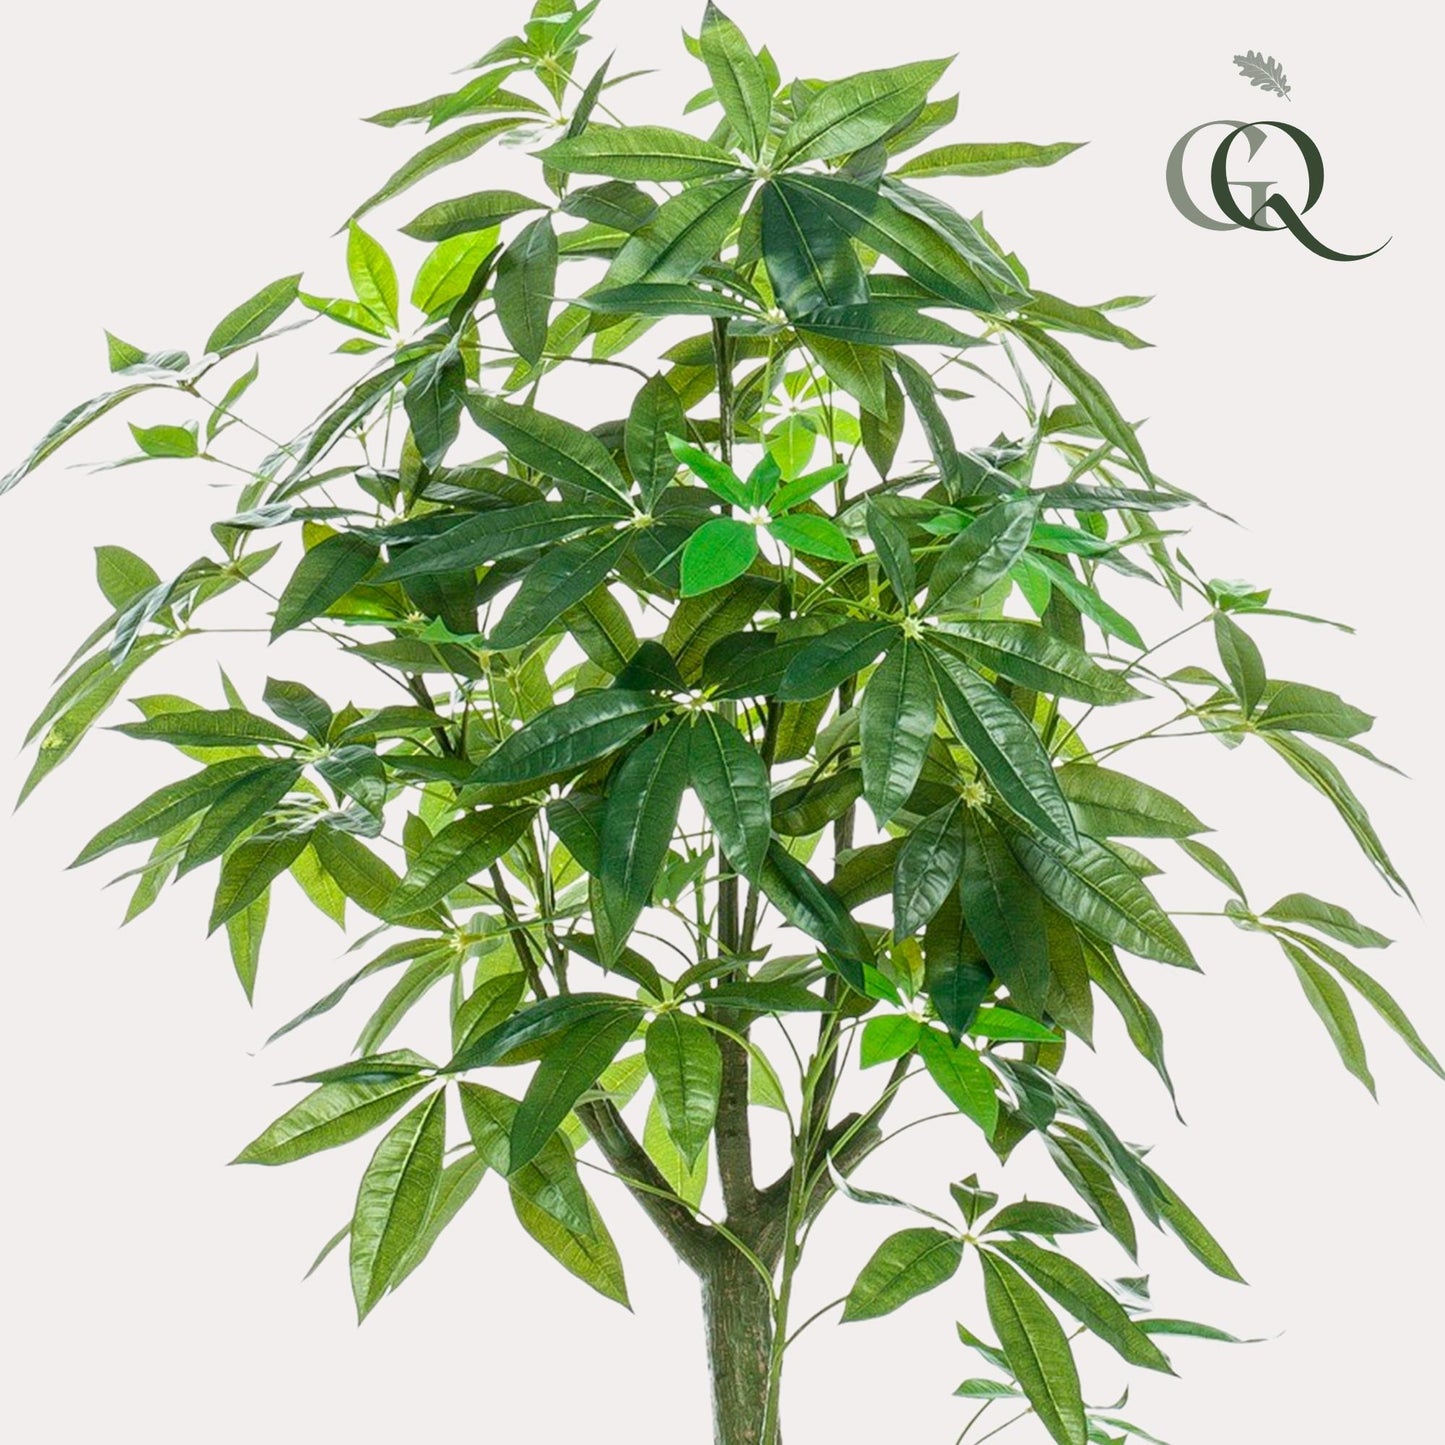 Kunstplant - Pachira Aquatica - Geldboom Kunstplant - Pachira Aquatica - Geldboom - 150 cm